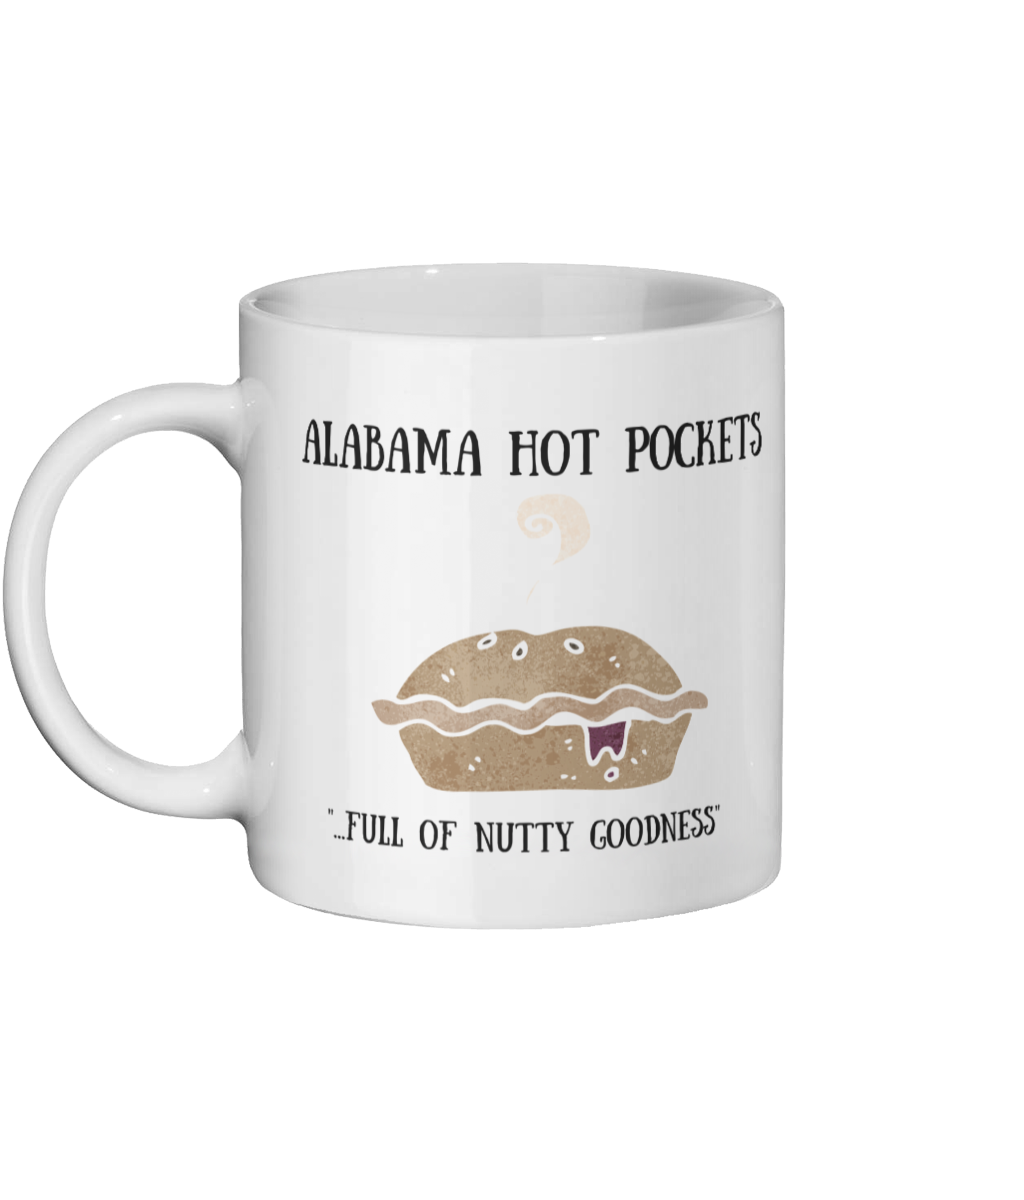 A delightfully rude mug depicting a pie and calling it an Alabama Hot Pocke...